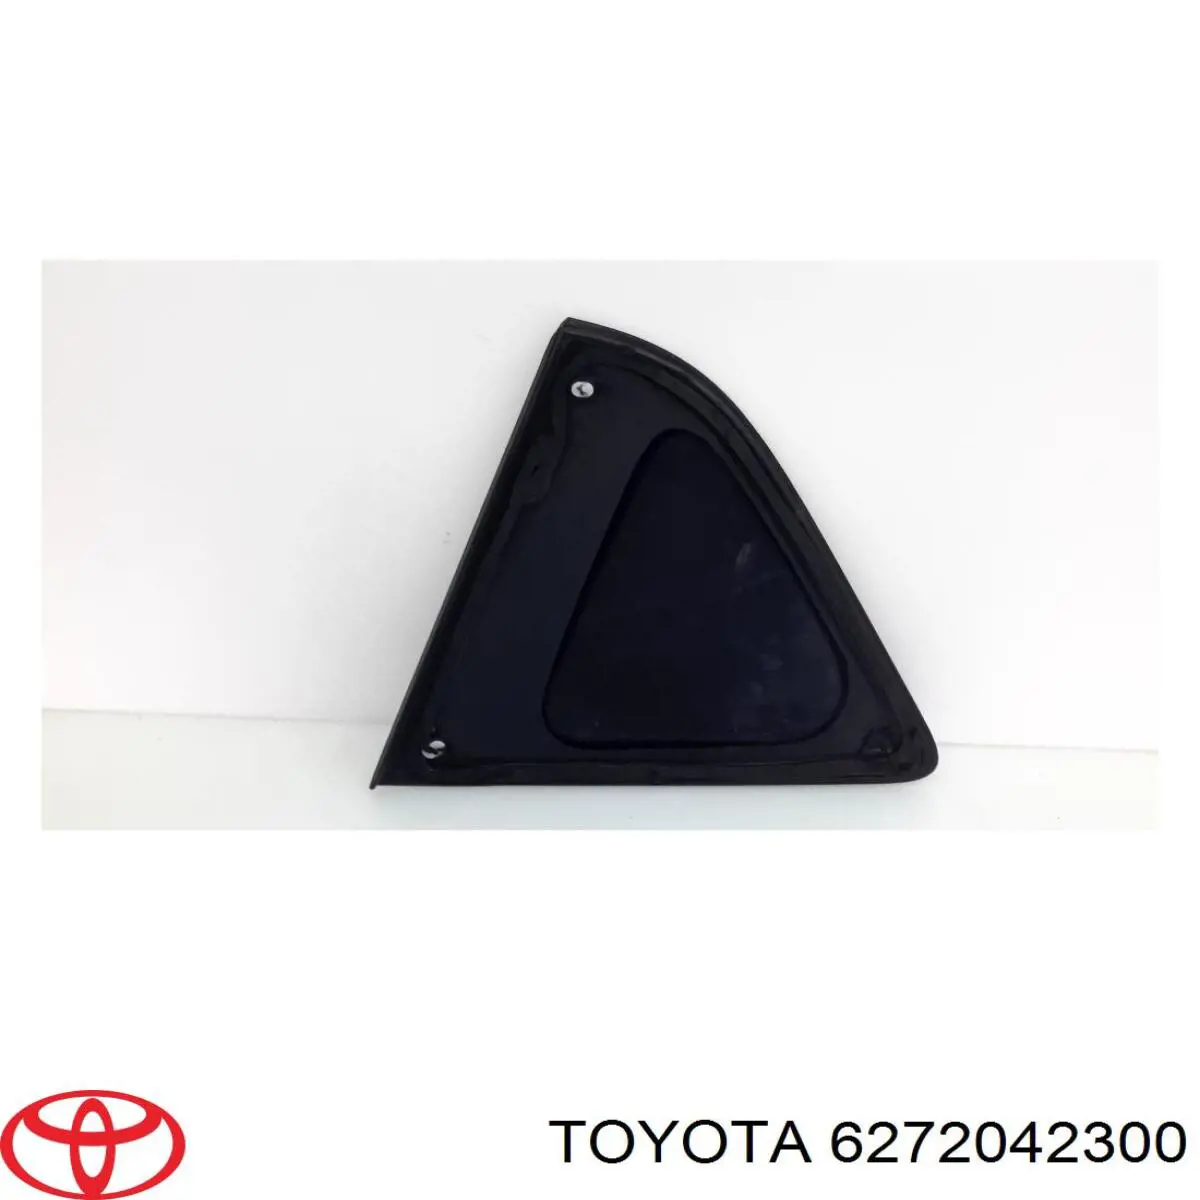 6272042300 Toyota ventanilla costado superior izquierda (lado maletero)